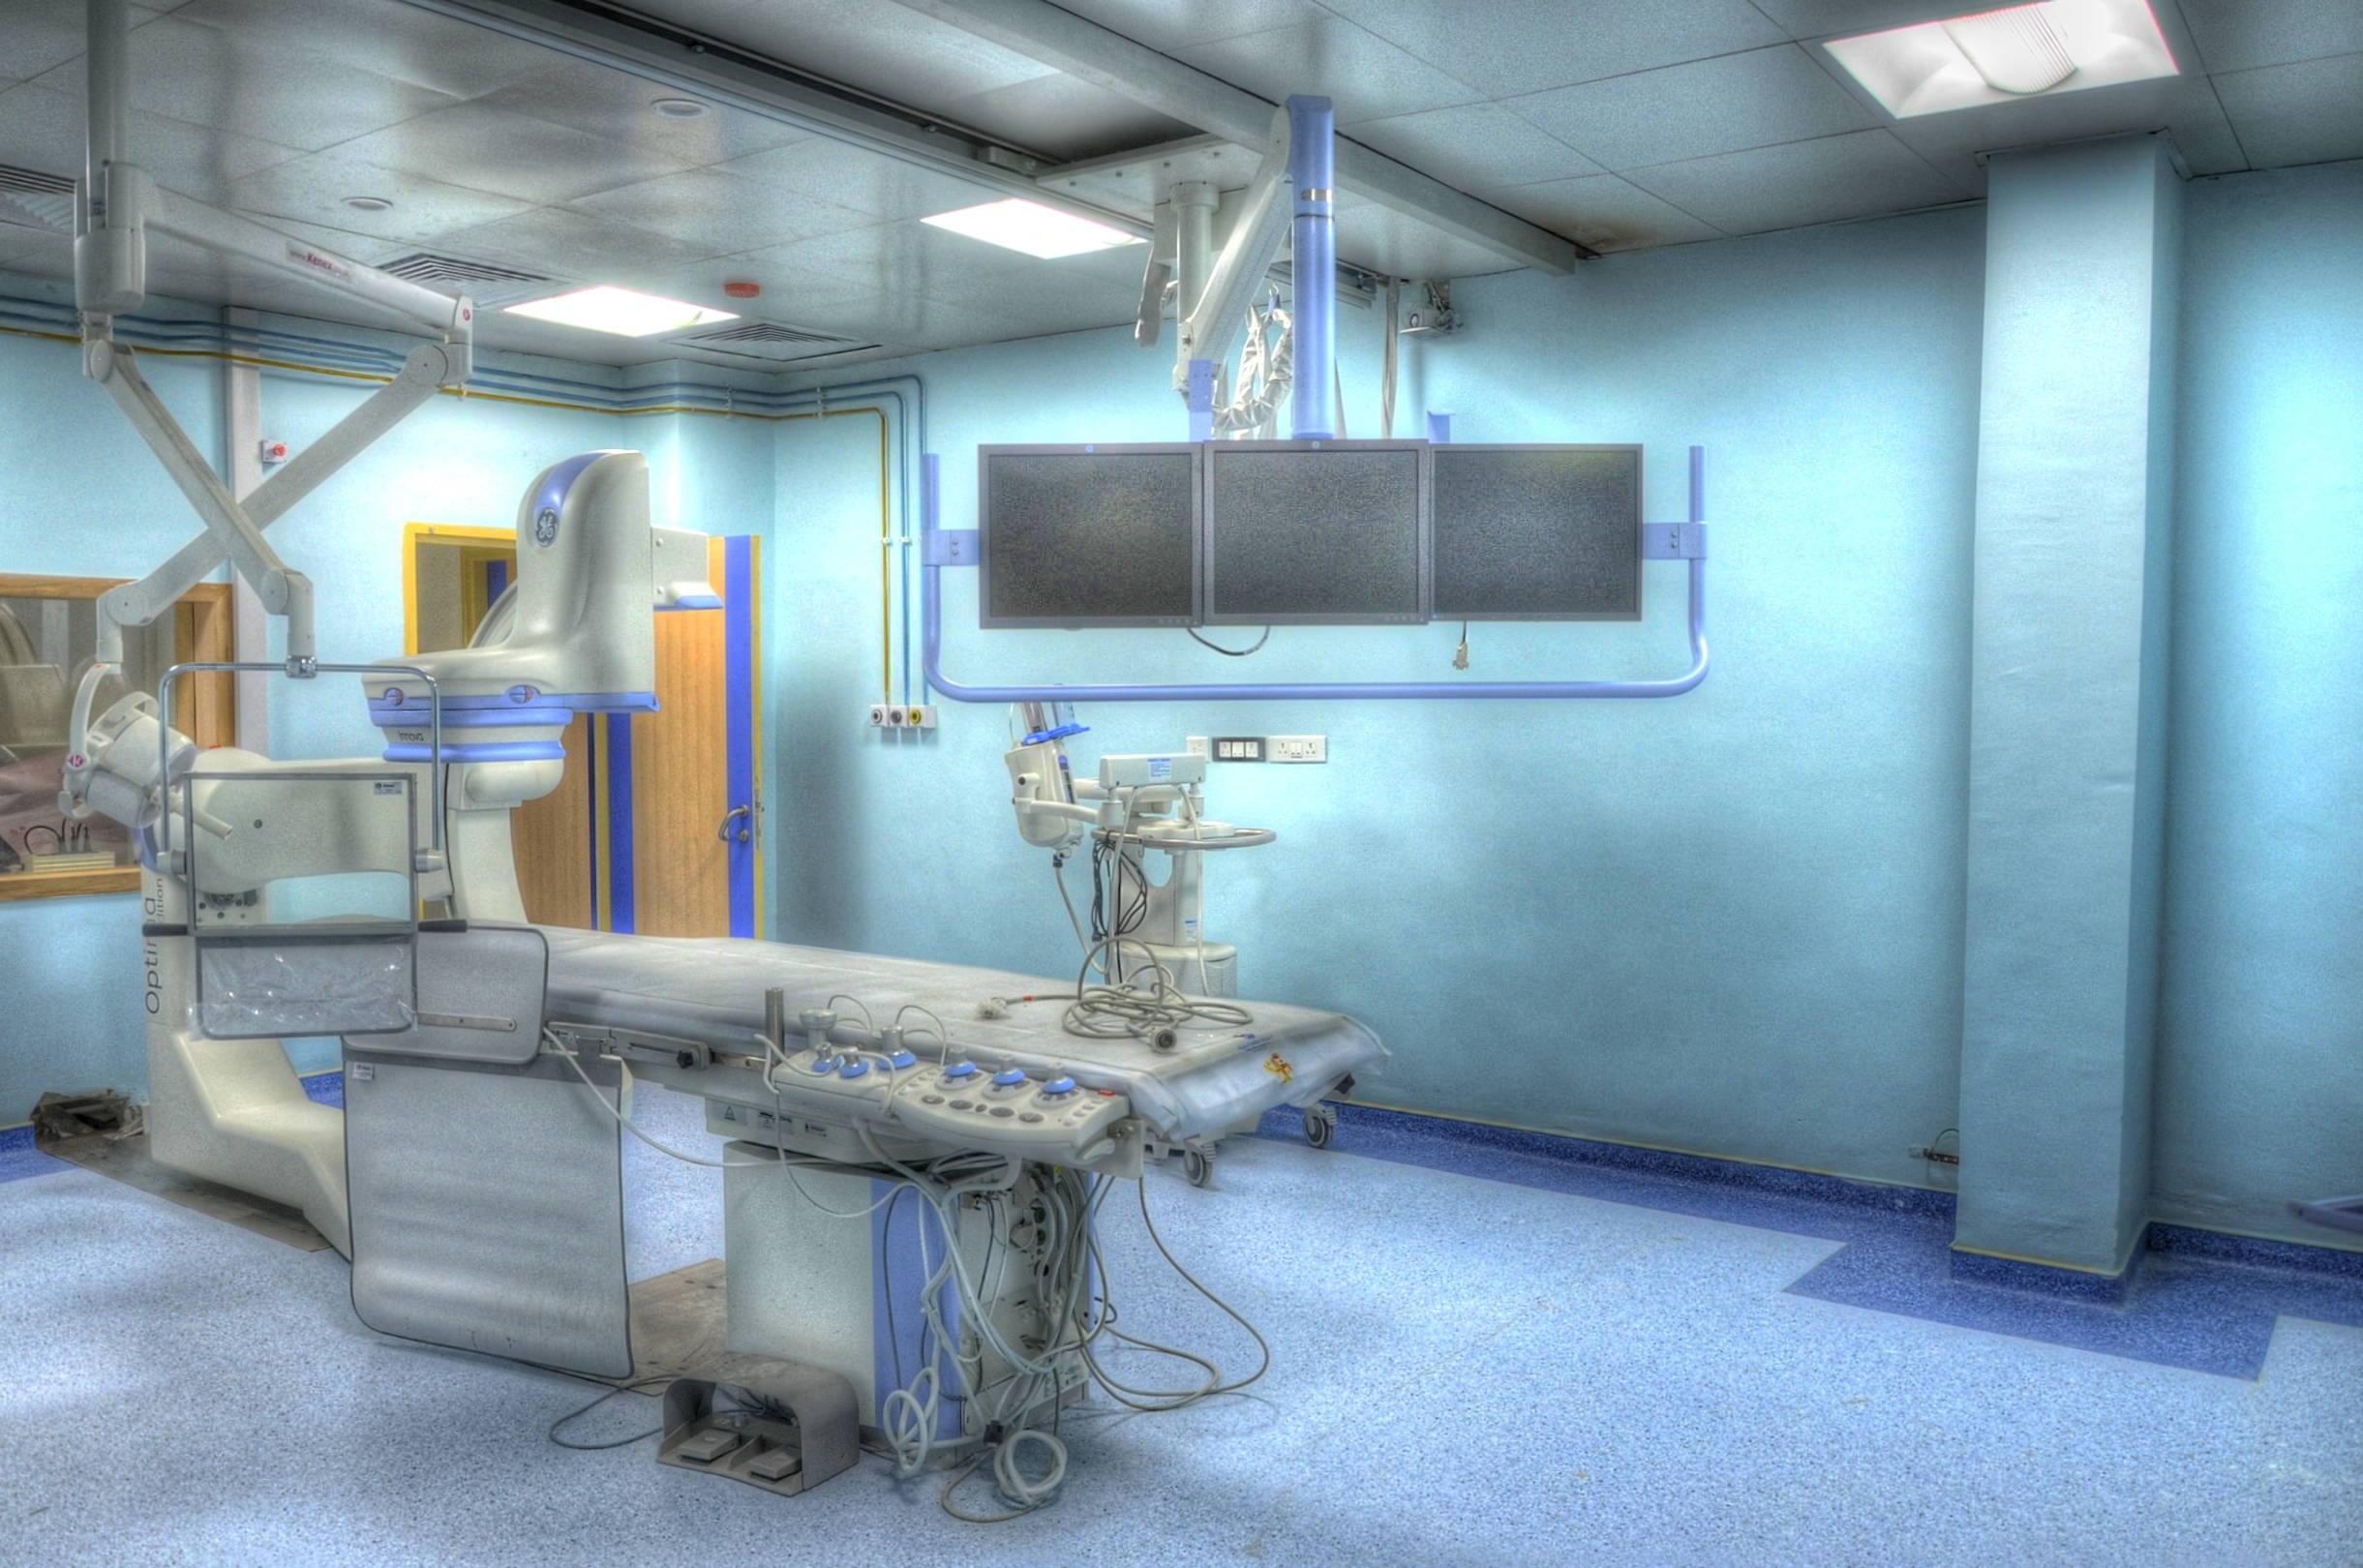 Medical HDR Machine Room Hospital 2441x1620